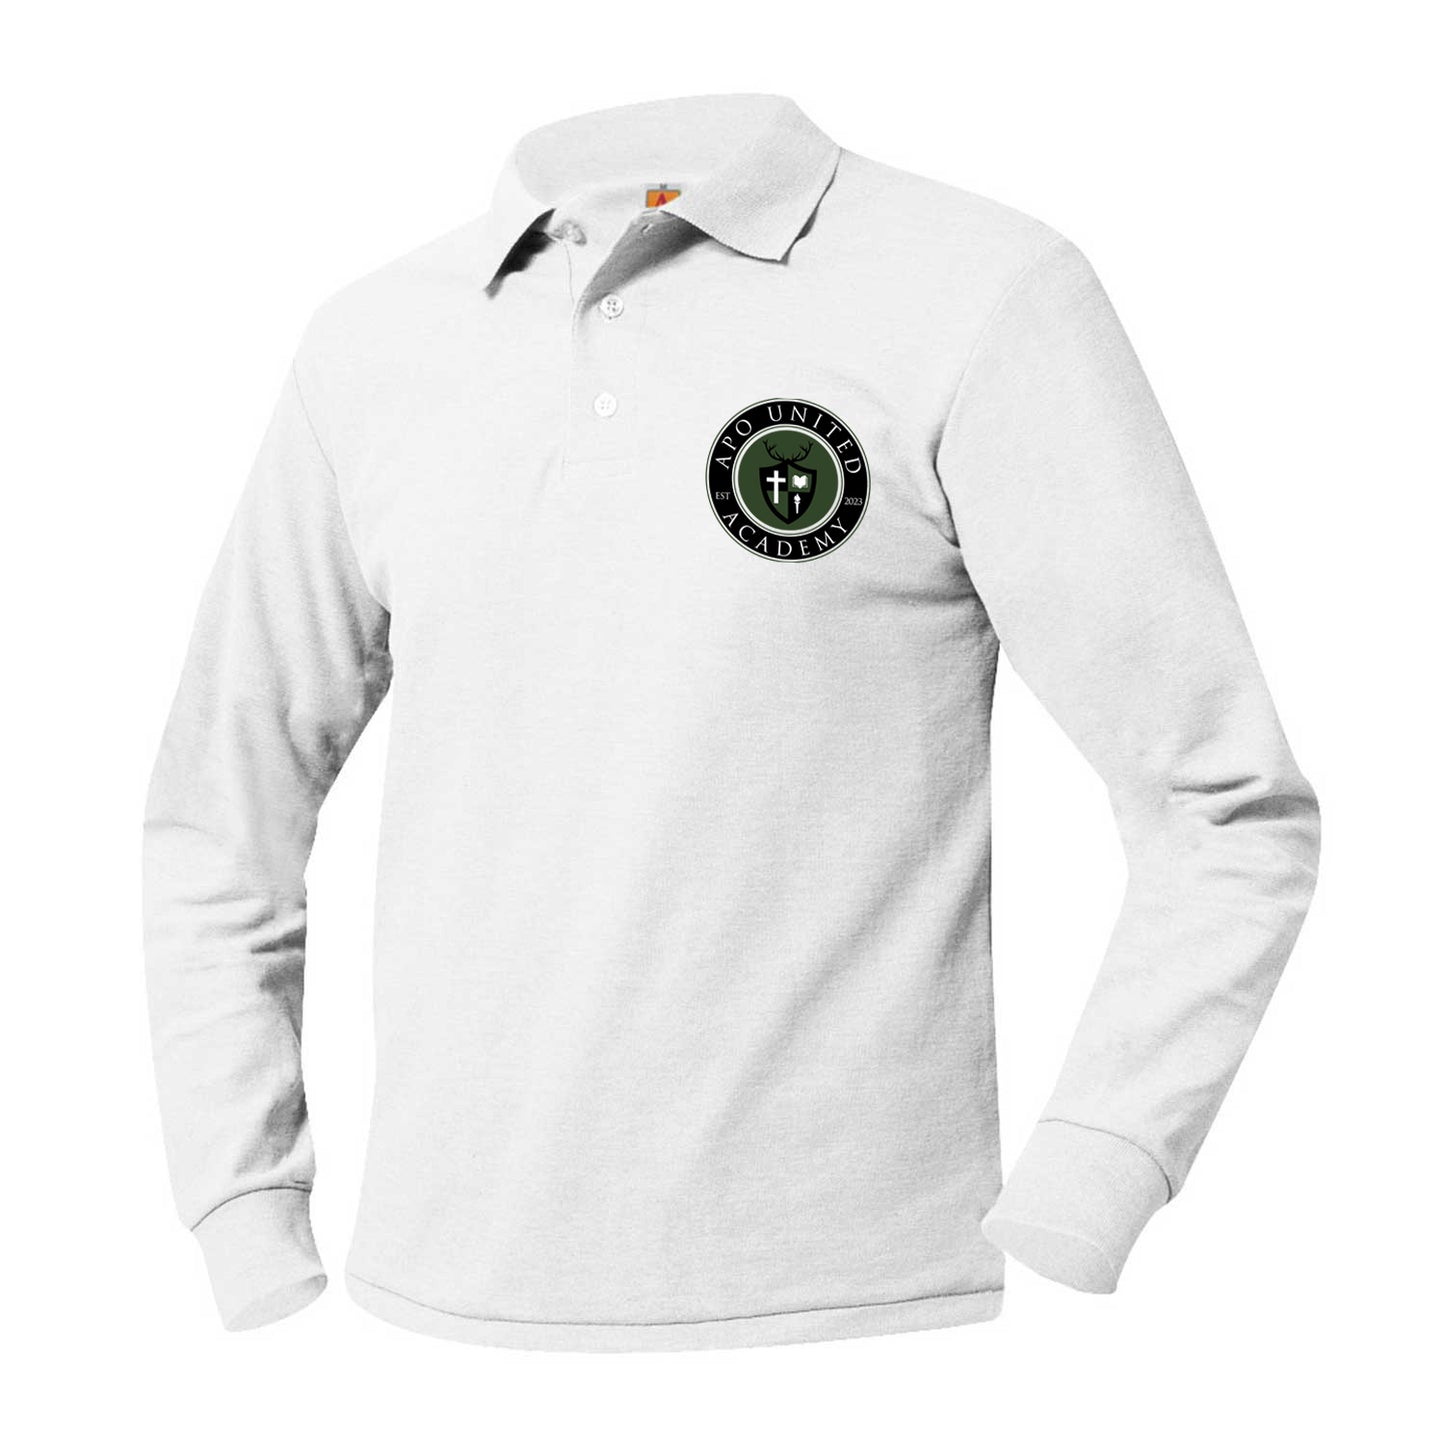 Youth Long Sleeve Pique Polo with APO Logo